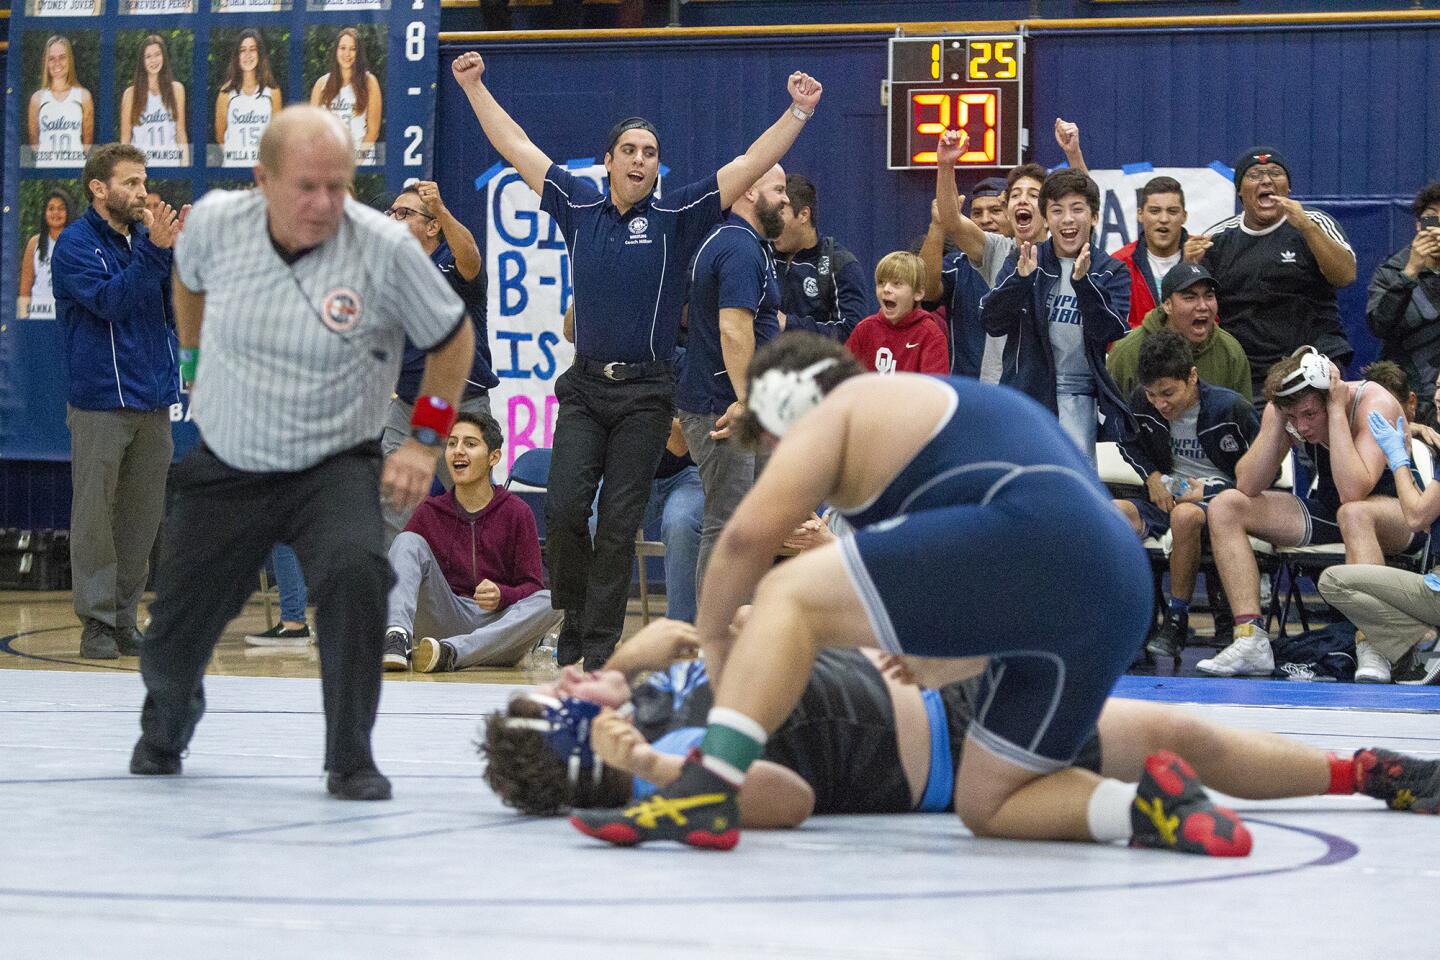 Photo Gallery: Corona del Mar vs. Newport Harbor in wrestling